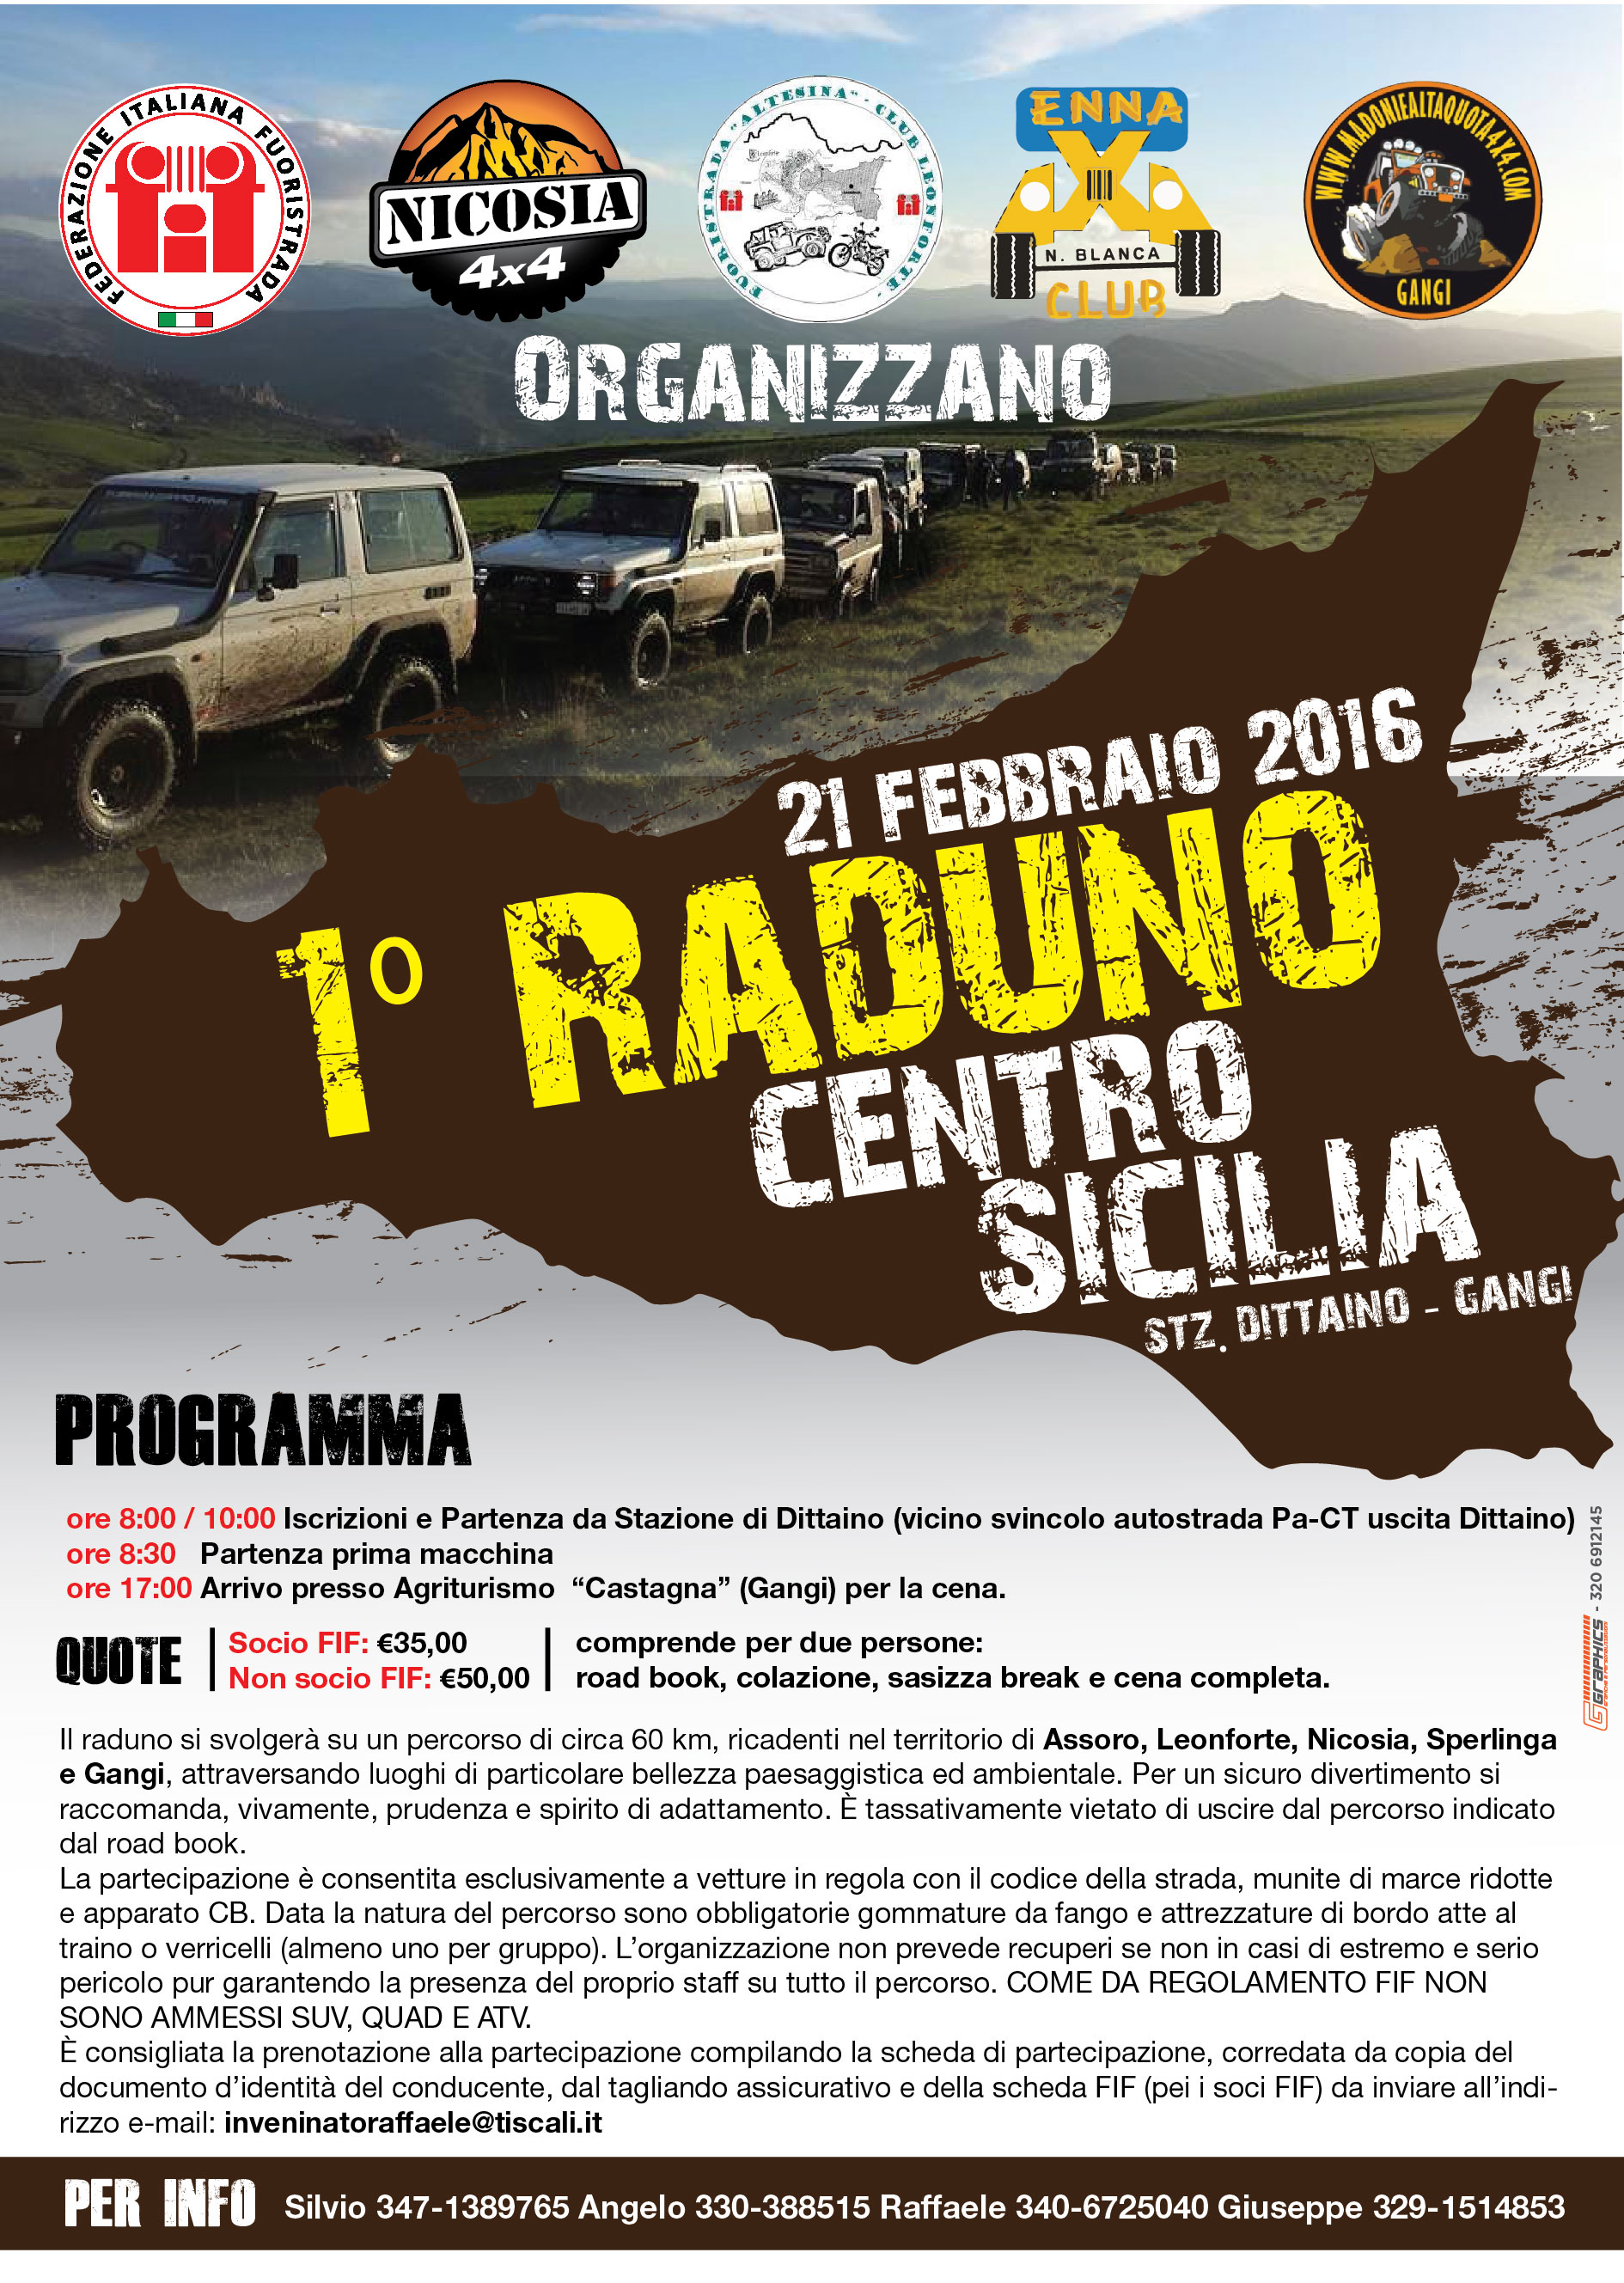 locandina_raduno_centro_sicilia-01.jpg